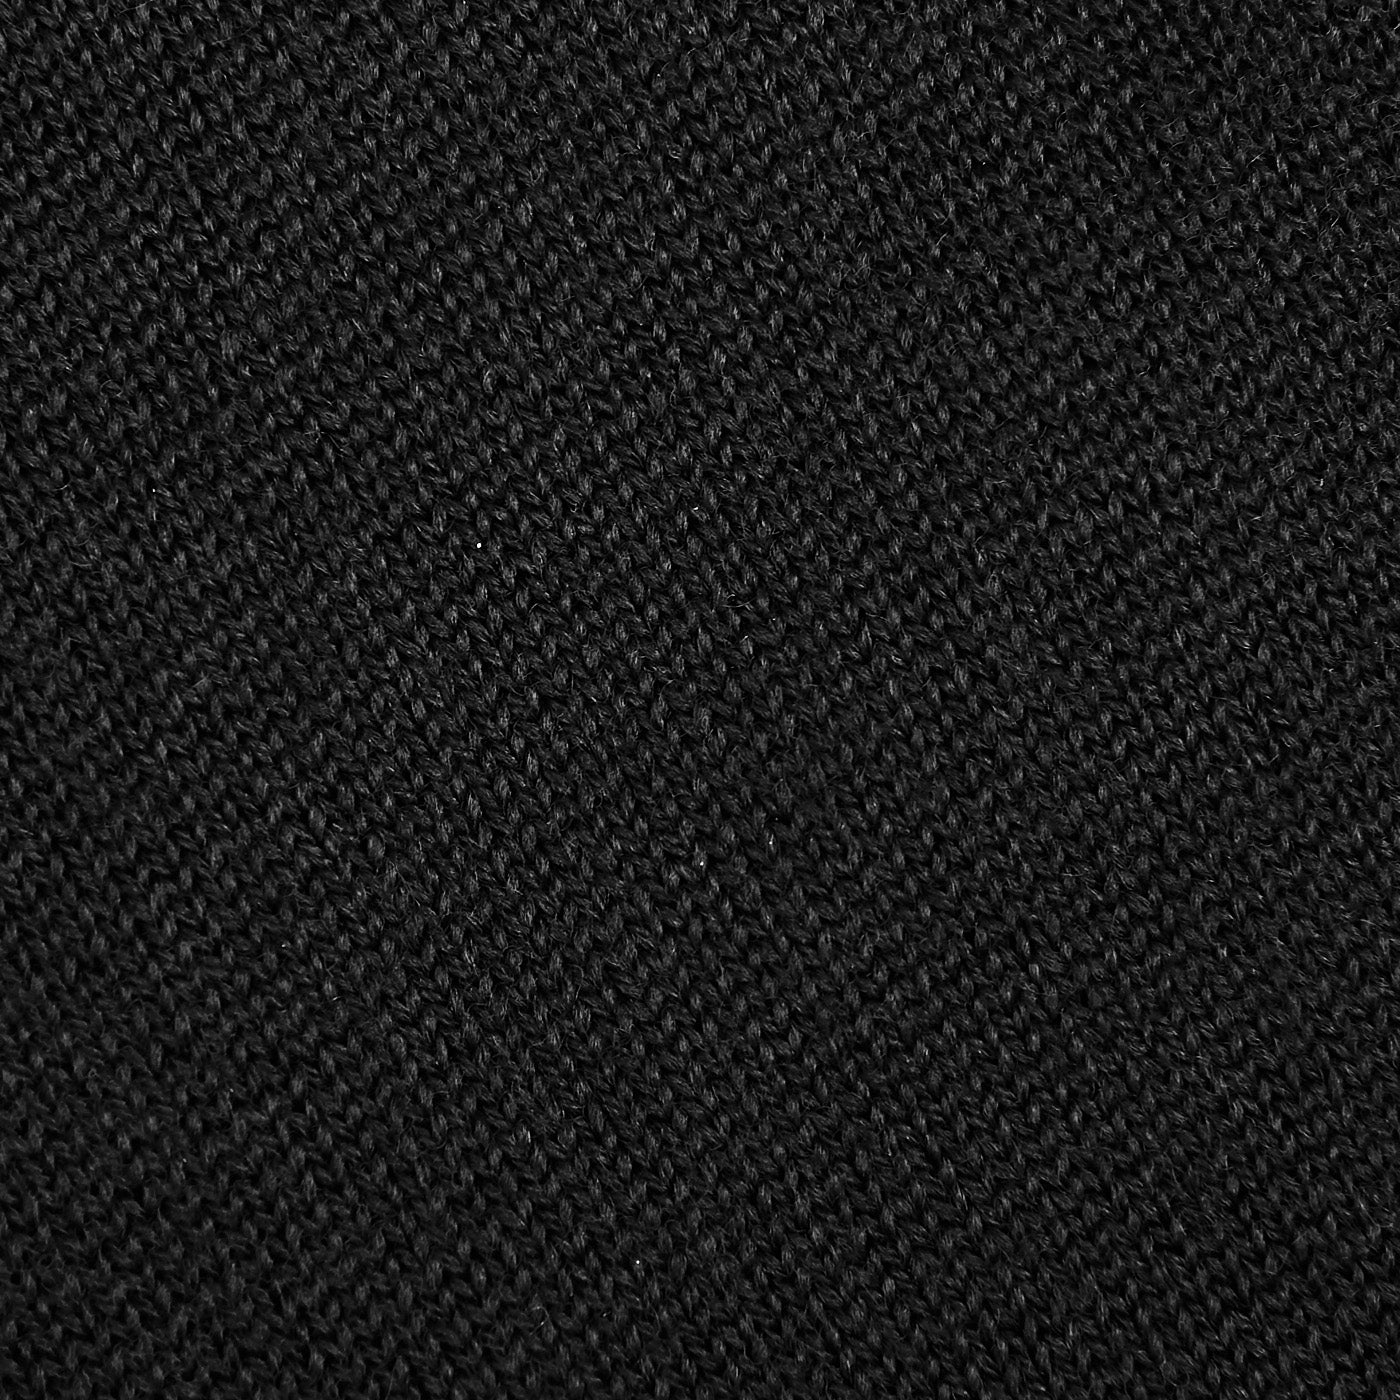 Gran Sasso Black Extra Fine Merino Roll Neck Fabric